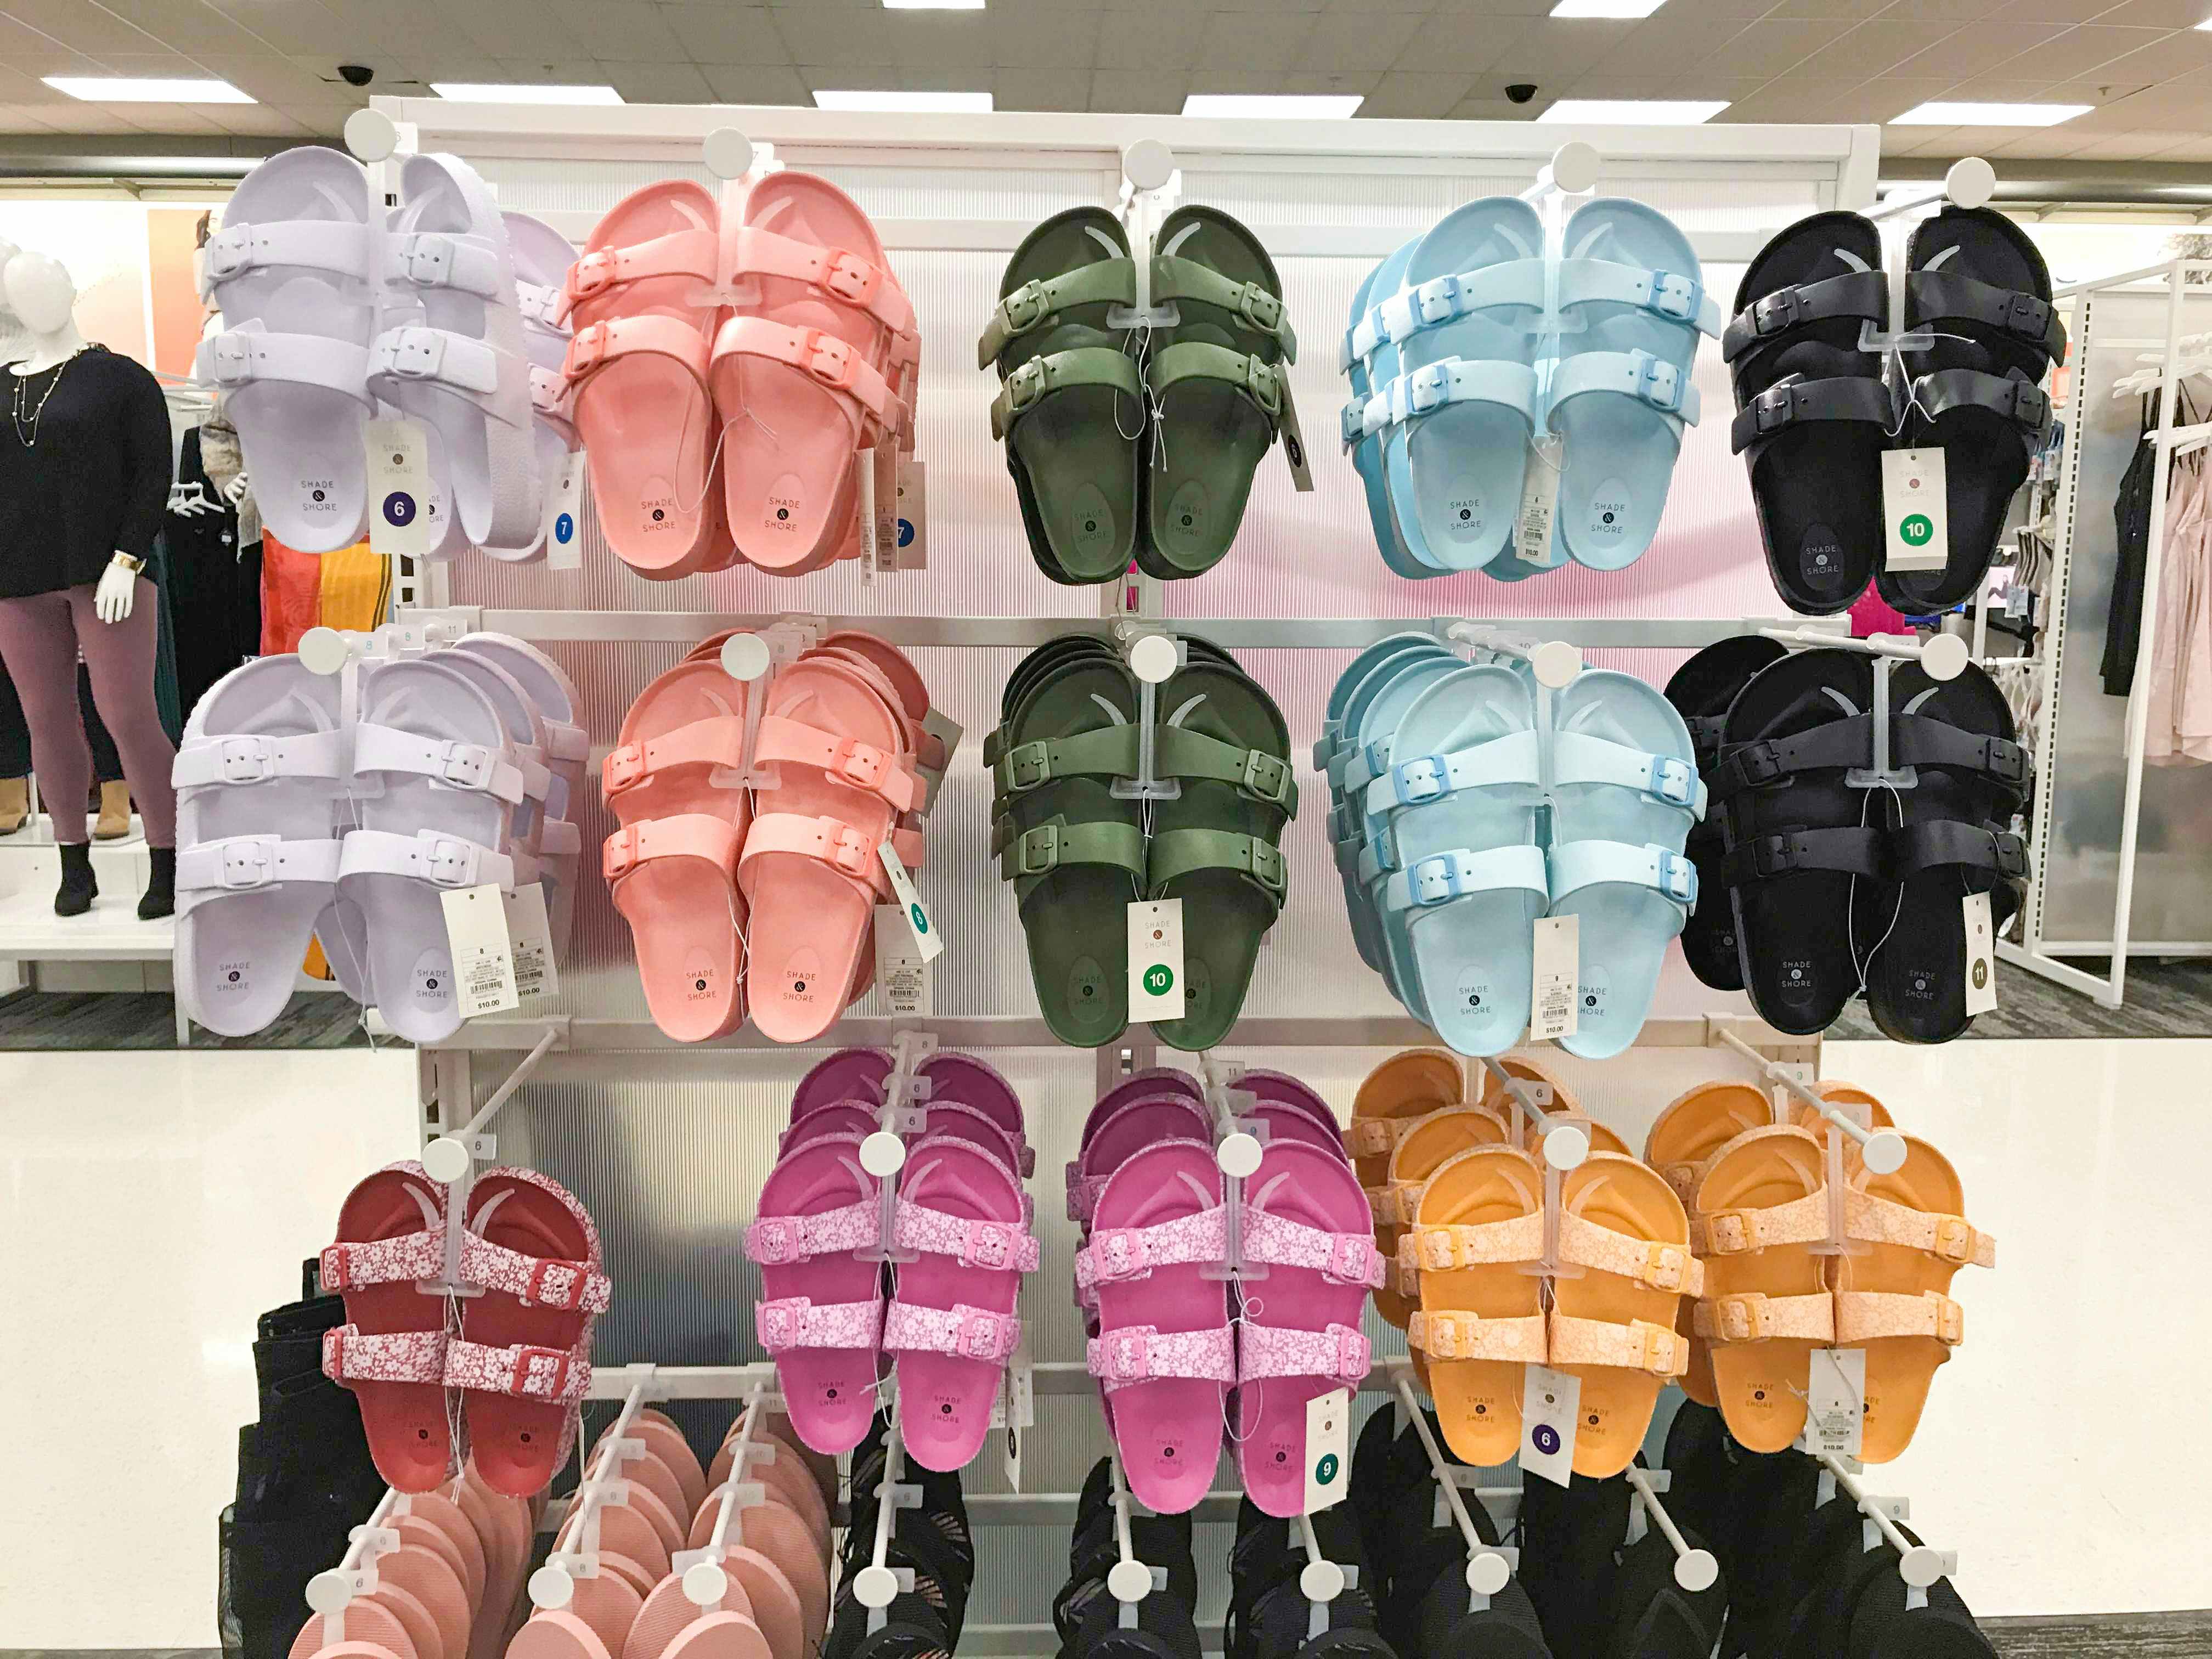 Target's display of dupe Birkenstock sandals.